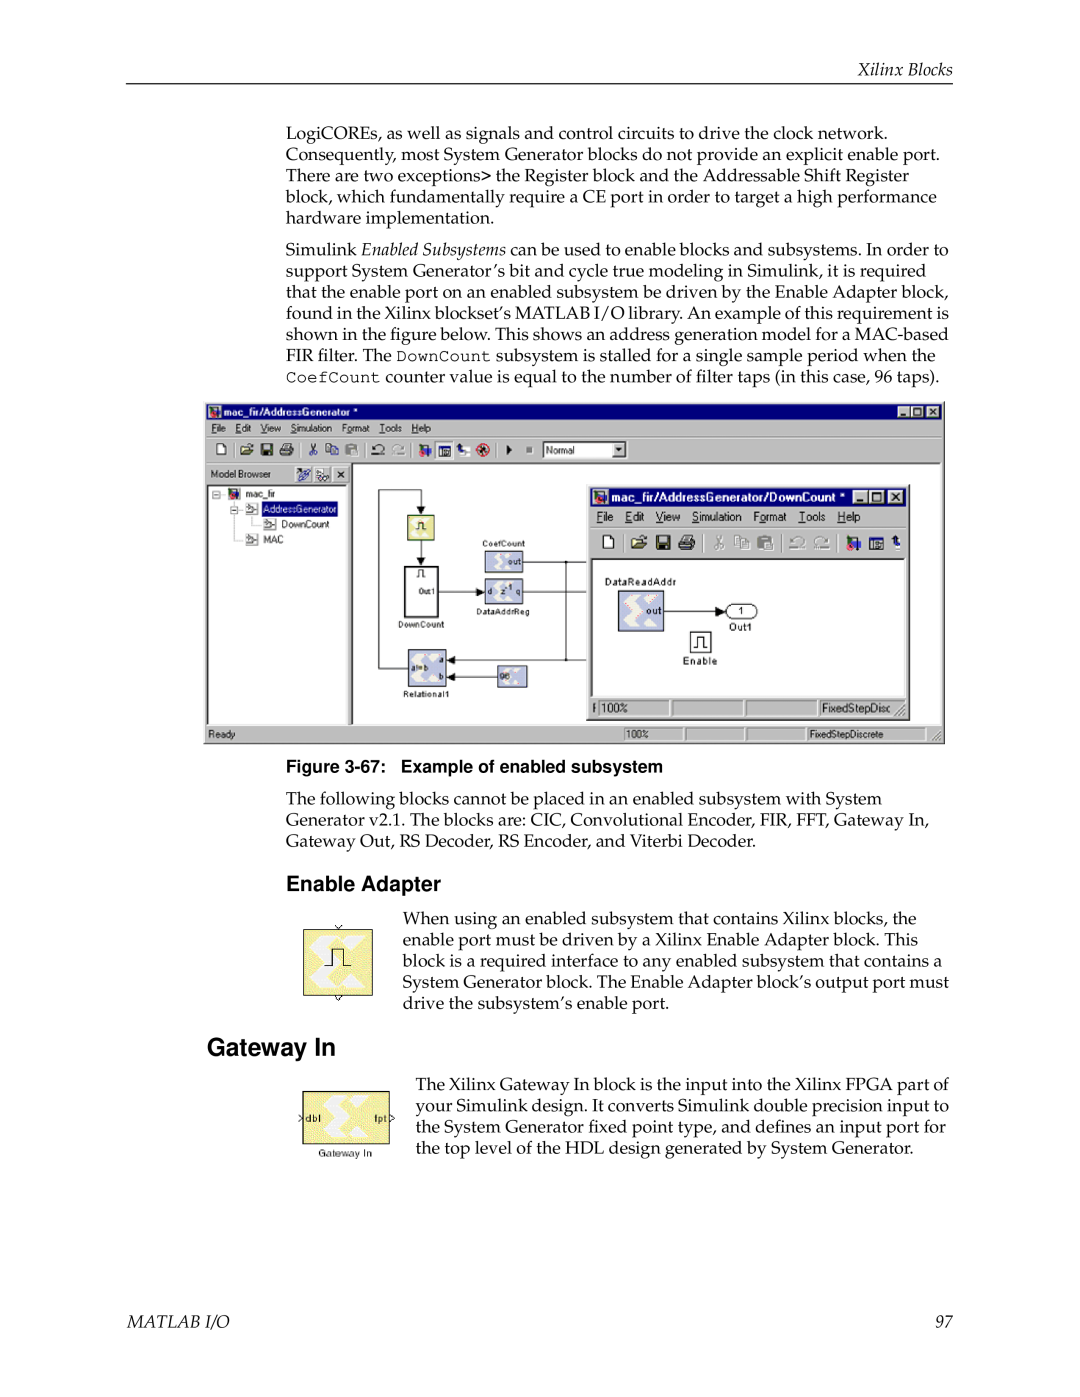 Xilinx V2.1 manual Gateway In, Enable Adapter, Matlab I/O, Xilinx Blocks 